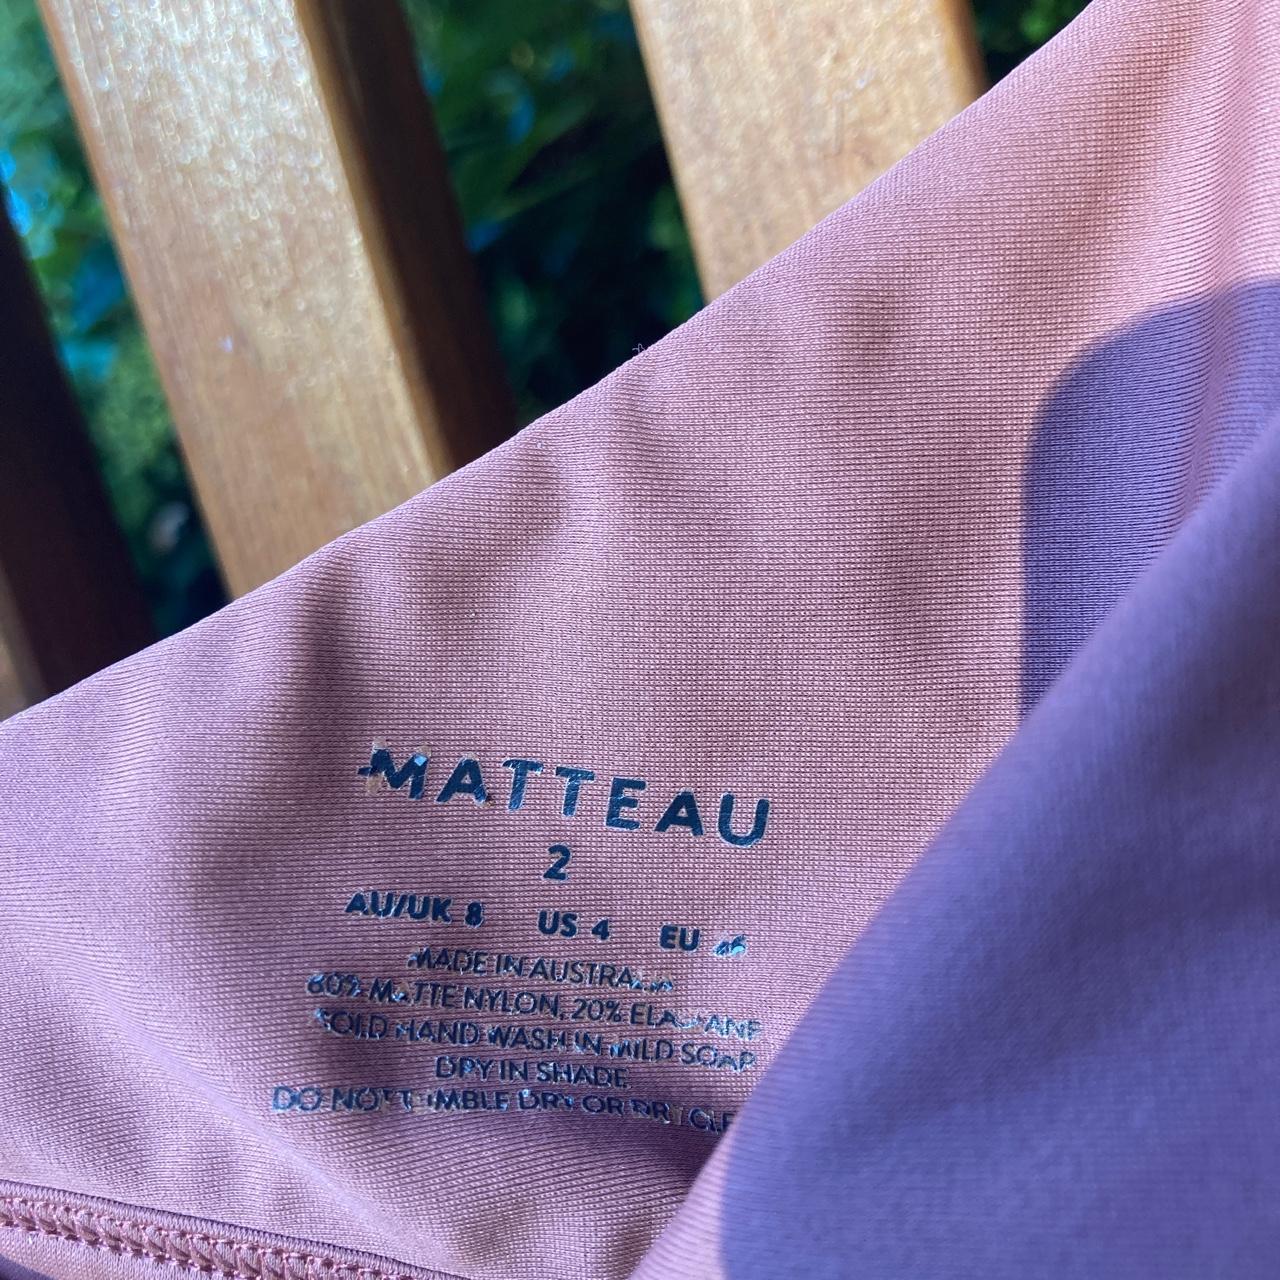 Product Image 2 - Repop Matteau bikini. Aus size